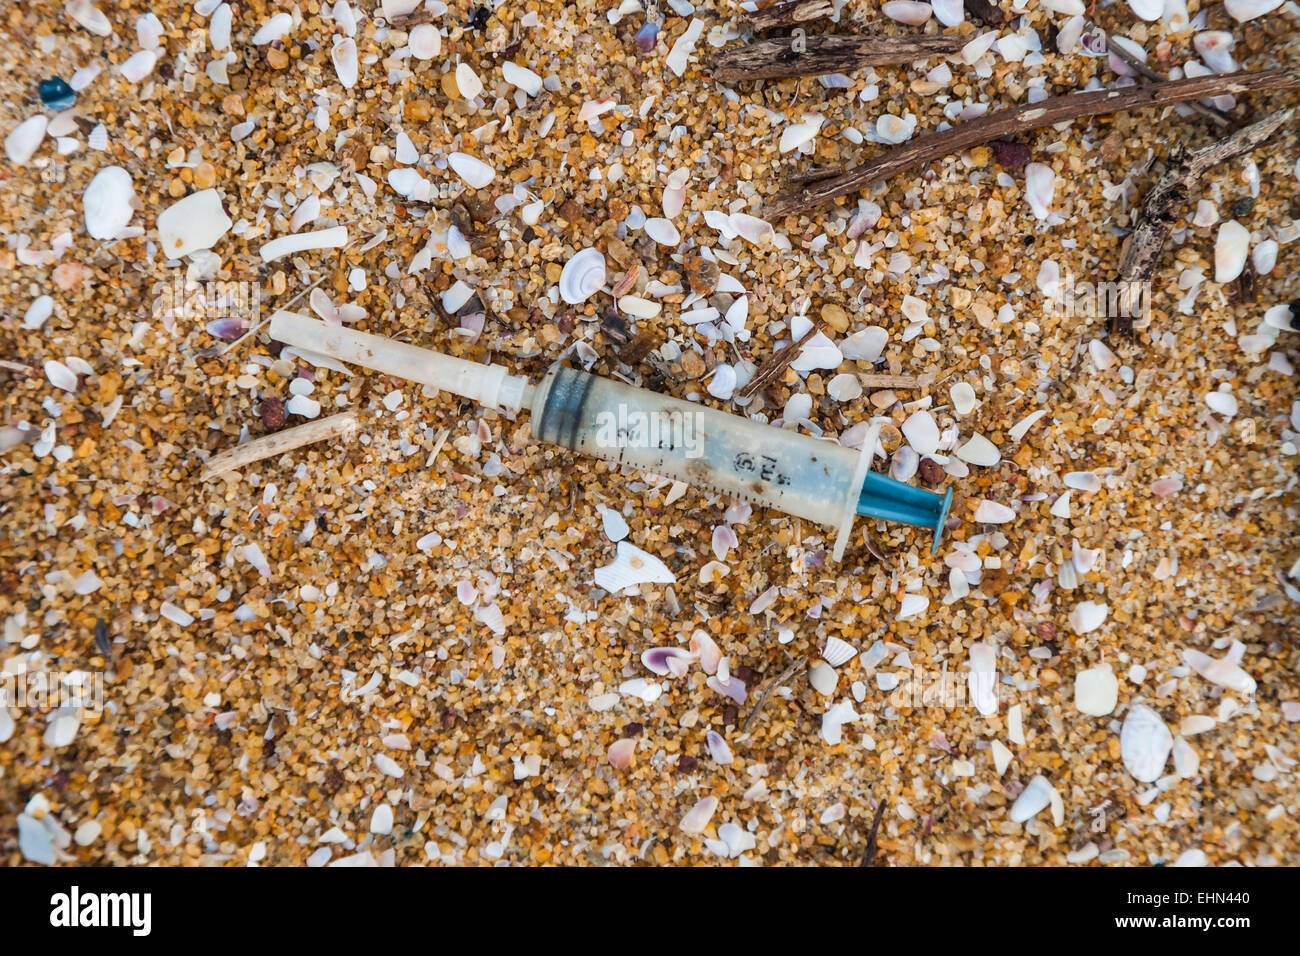 Syringe on a beach. Stock Photo